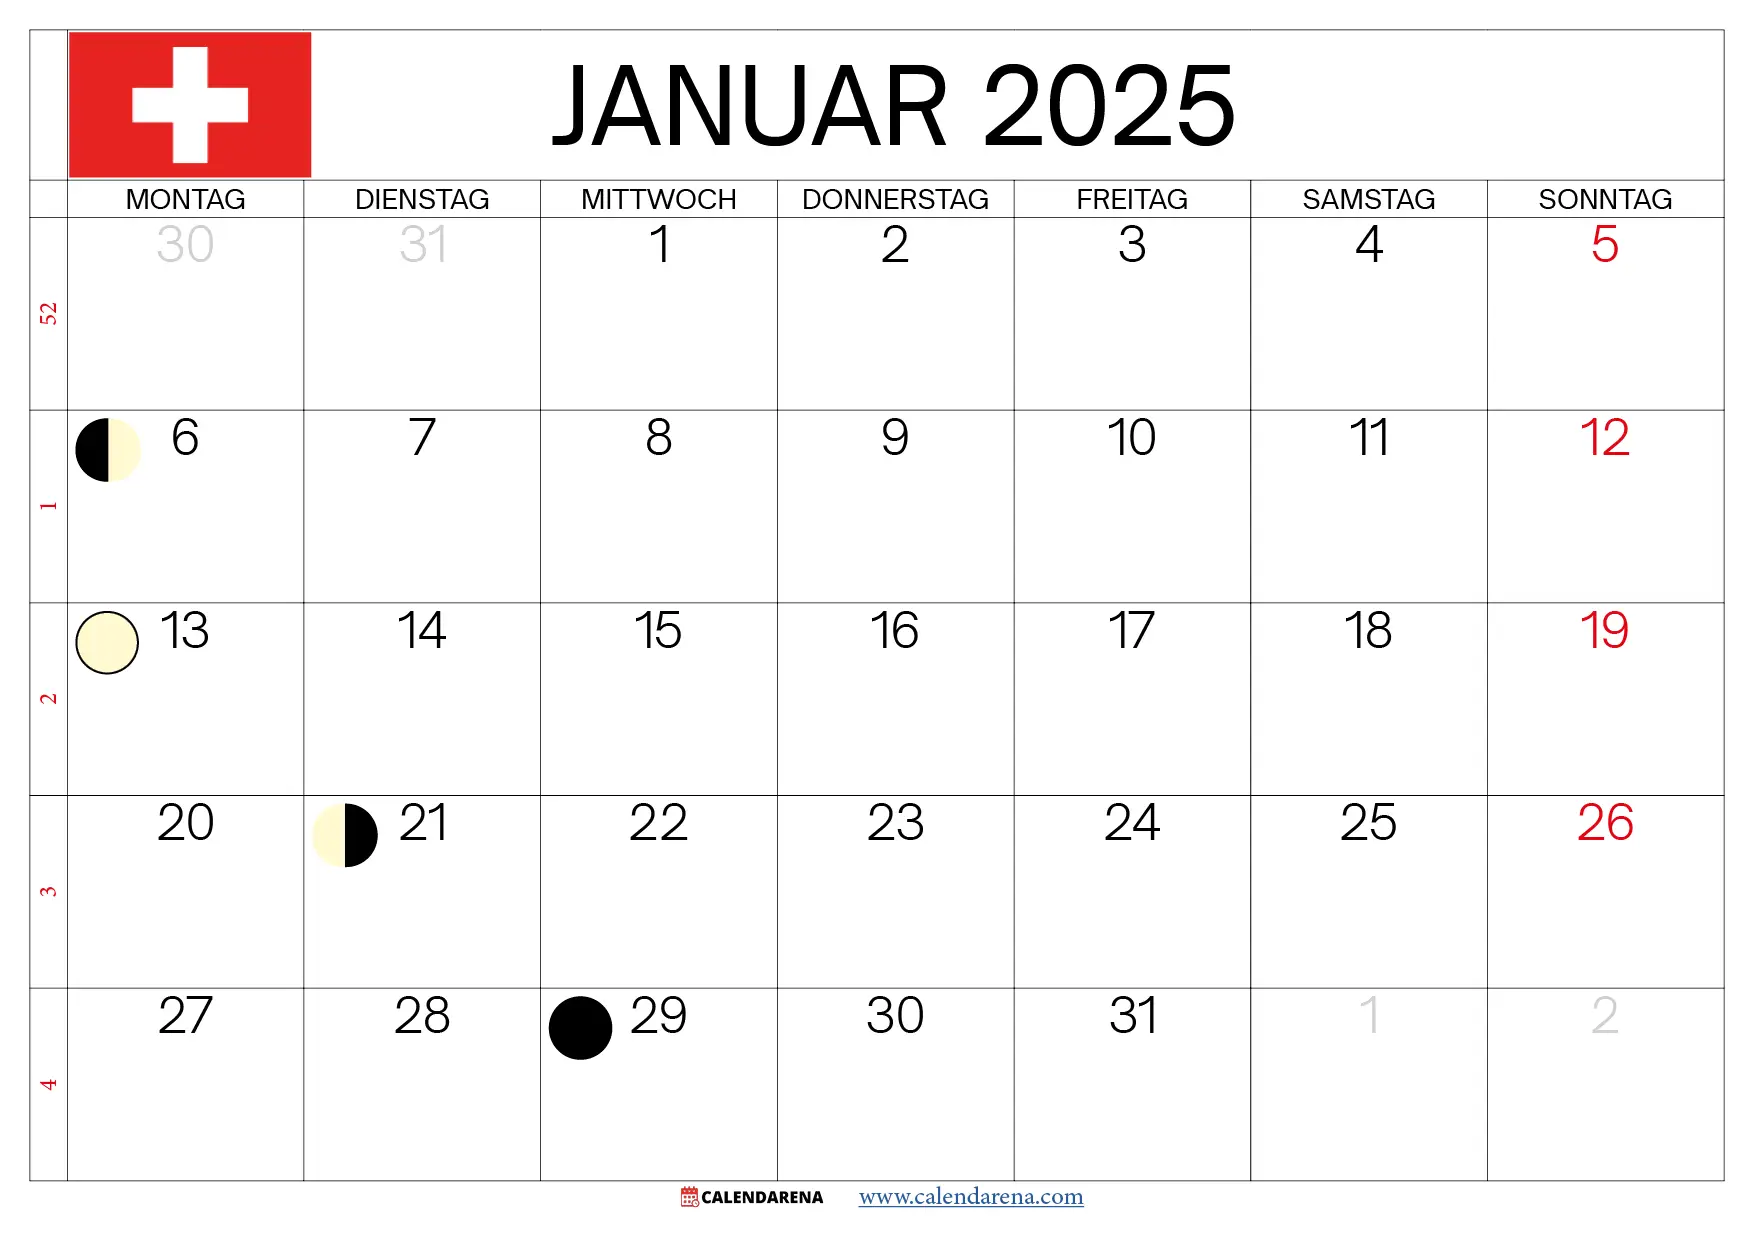 Januar 2025 Kalender schweiz